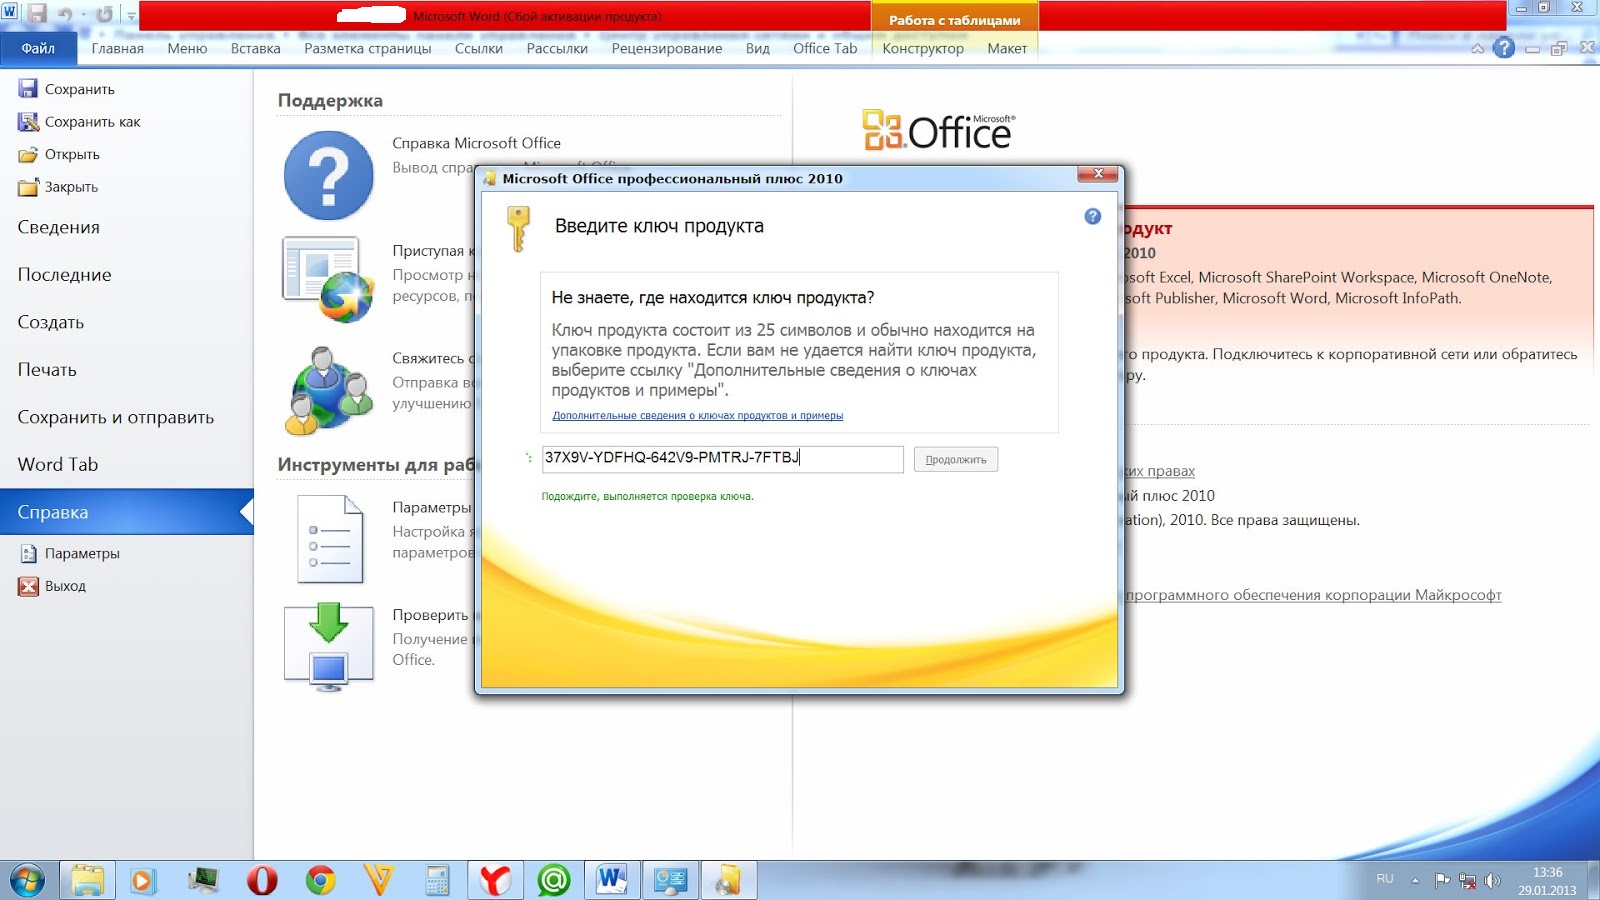 Регистрация ворд 2010 ключ. Ключ активации MS Office 2010 лицензионный ключ. Ключи Office 2010 ключи. Ключ Microsoft Office 2010 professional Plus лицензионный ключ. Office 2010 ключик активации.